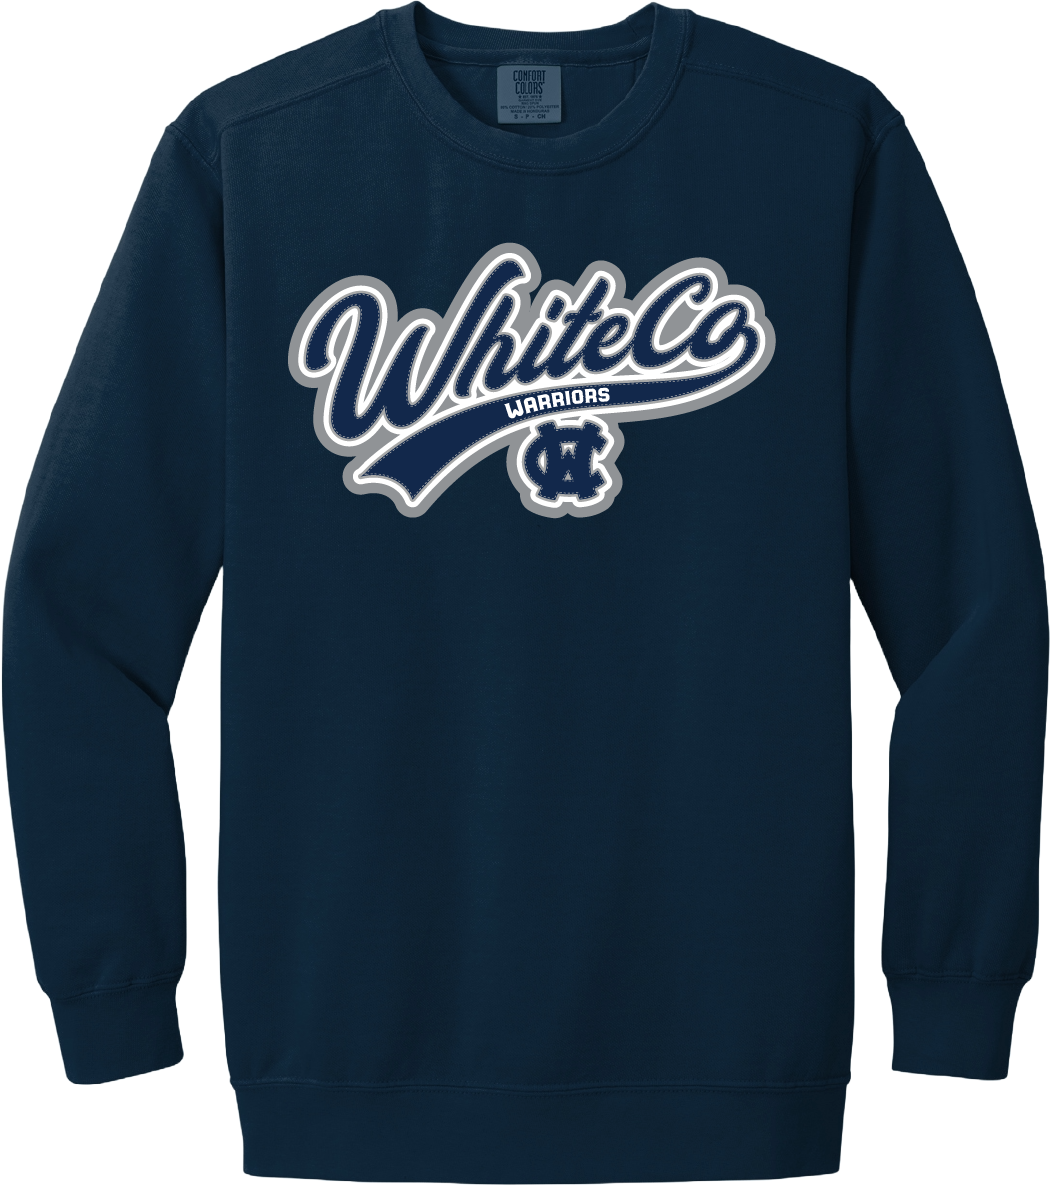 White Co Comfort Colors Sweatshirt (Navy)